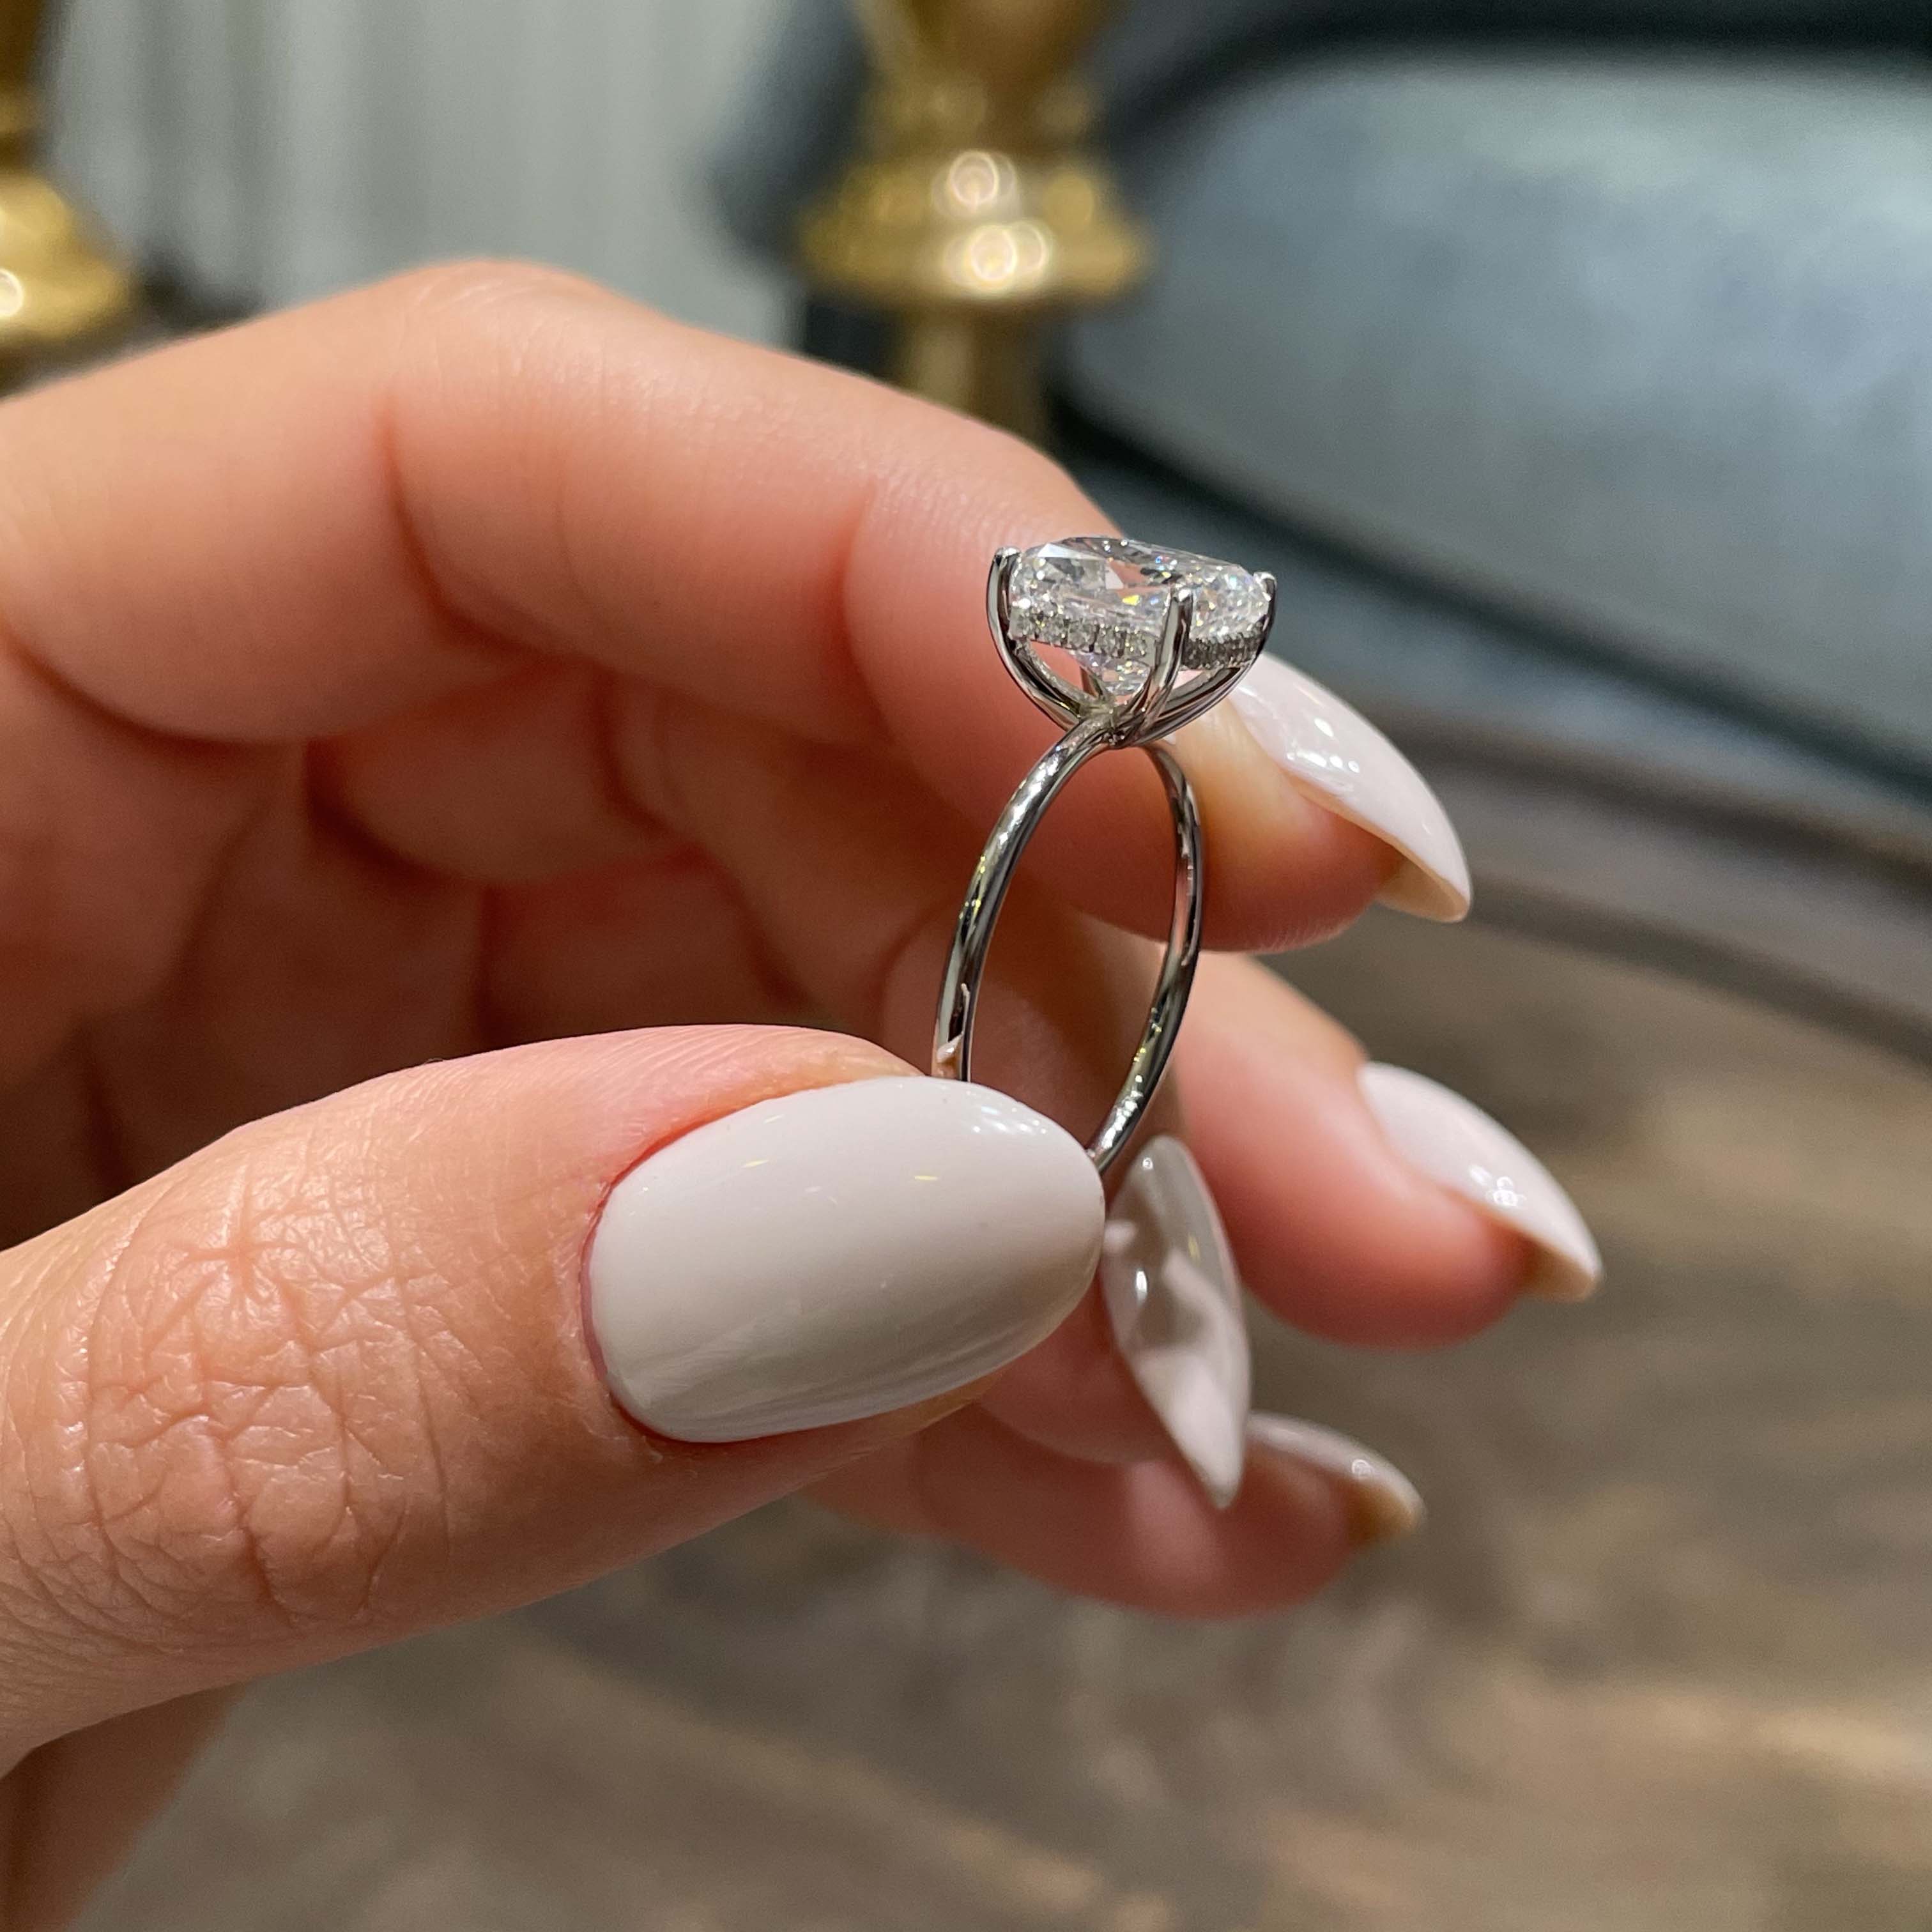 Priscilla Diamond Engagement Ring -18K White Gold